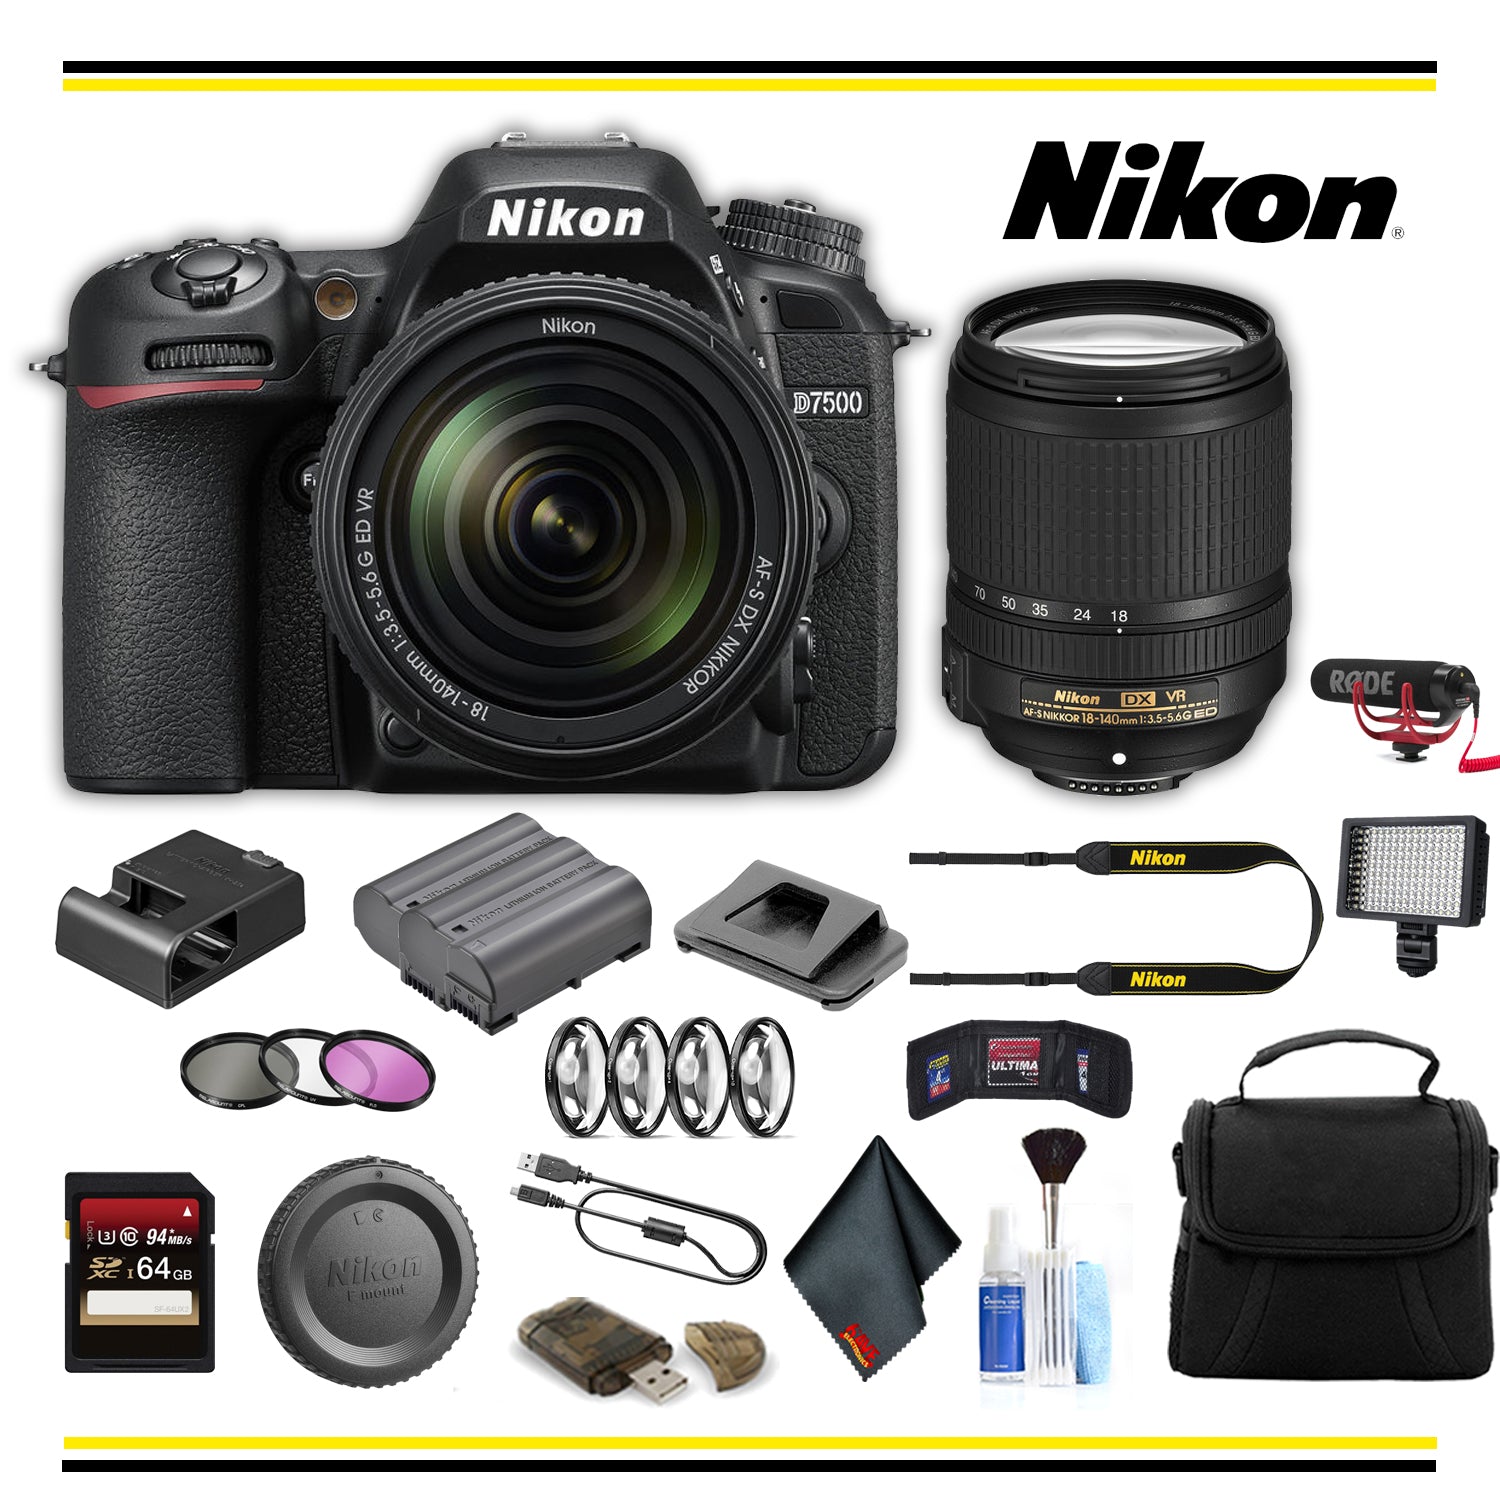 Nikon D D7500 20.9MP Digital SLR Camera - Black (Kit w/ 18-140mm VR Lens) Base Bundle